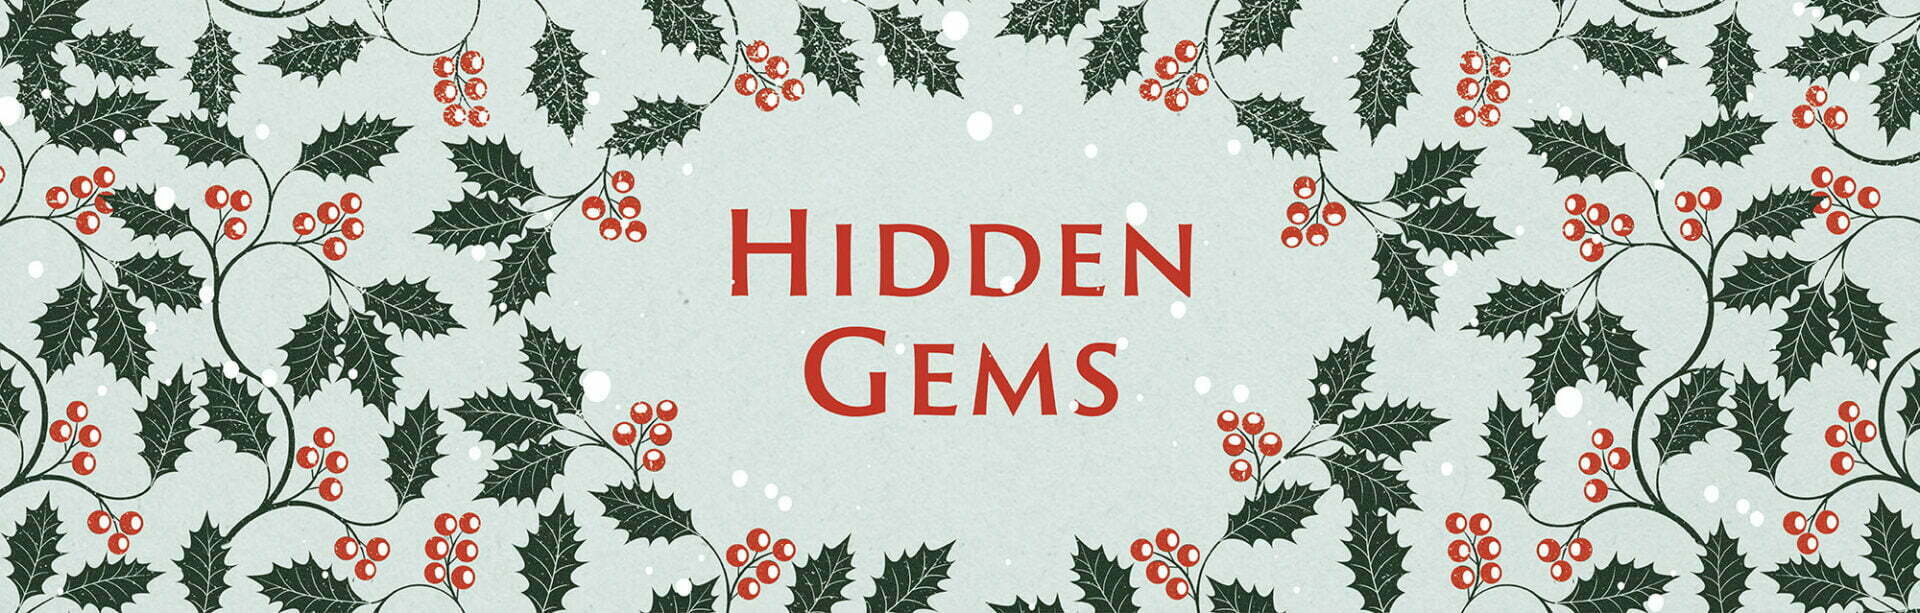 https://faber.wp.dev.diffusion.digital/wp-content/uploads/2021/11/Faber-Christmas-Gift-Guide-Hidden-Gems-1-1920x613.jpg